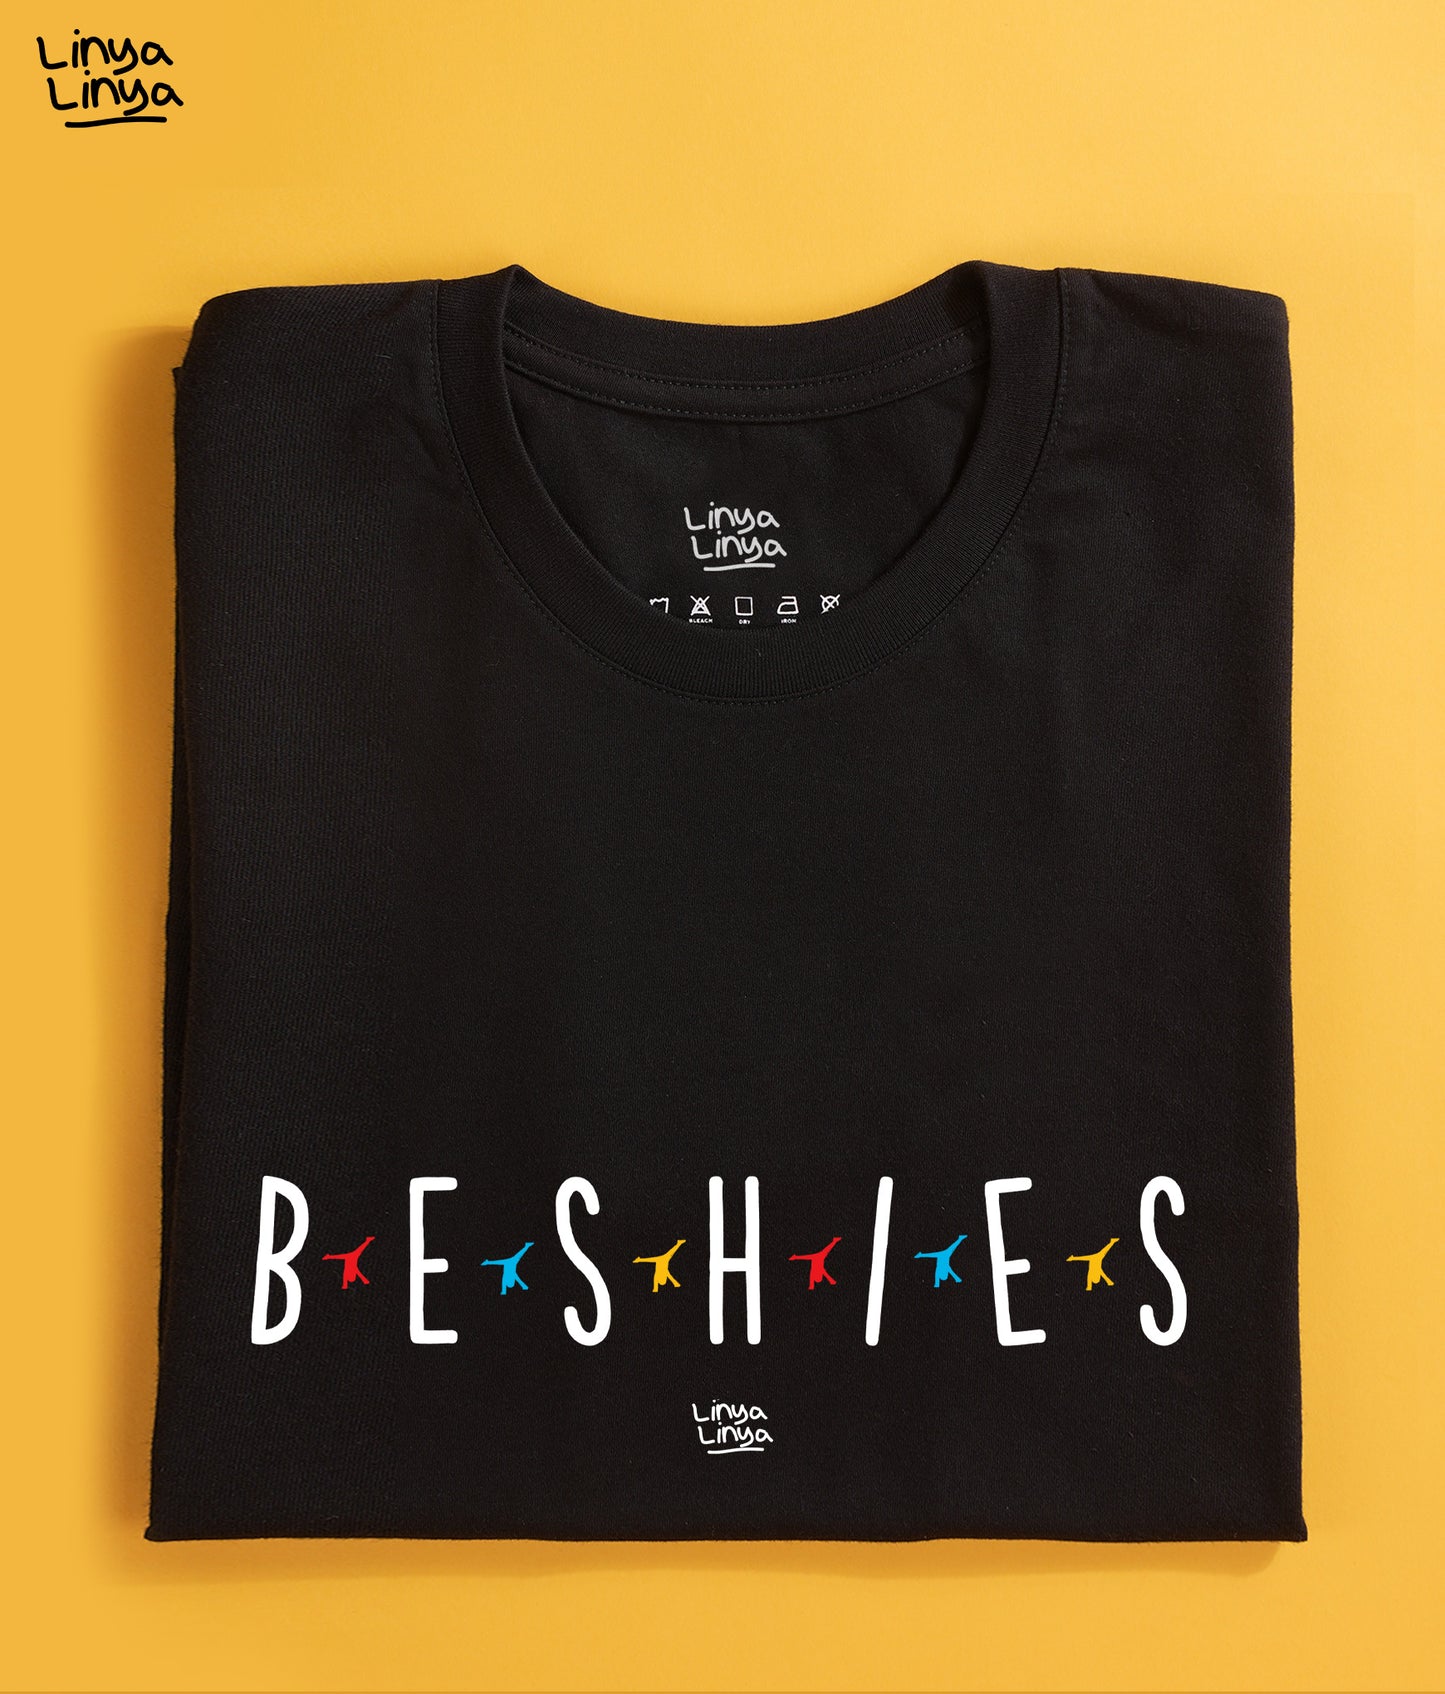 Beshies (Black)